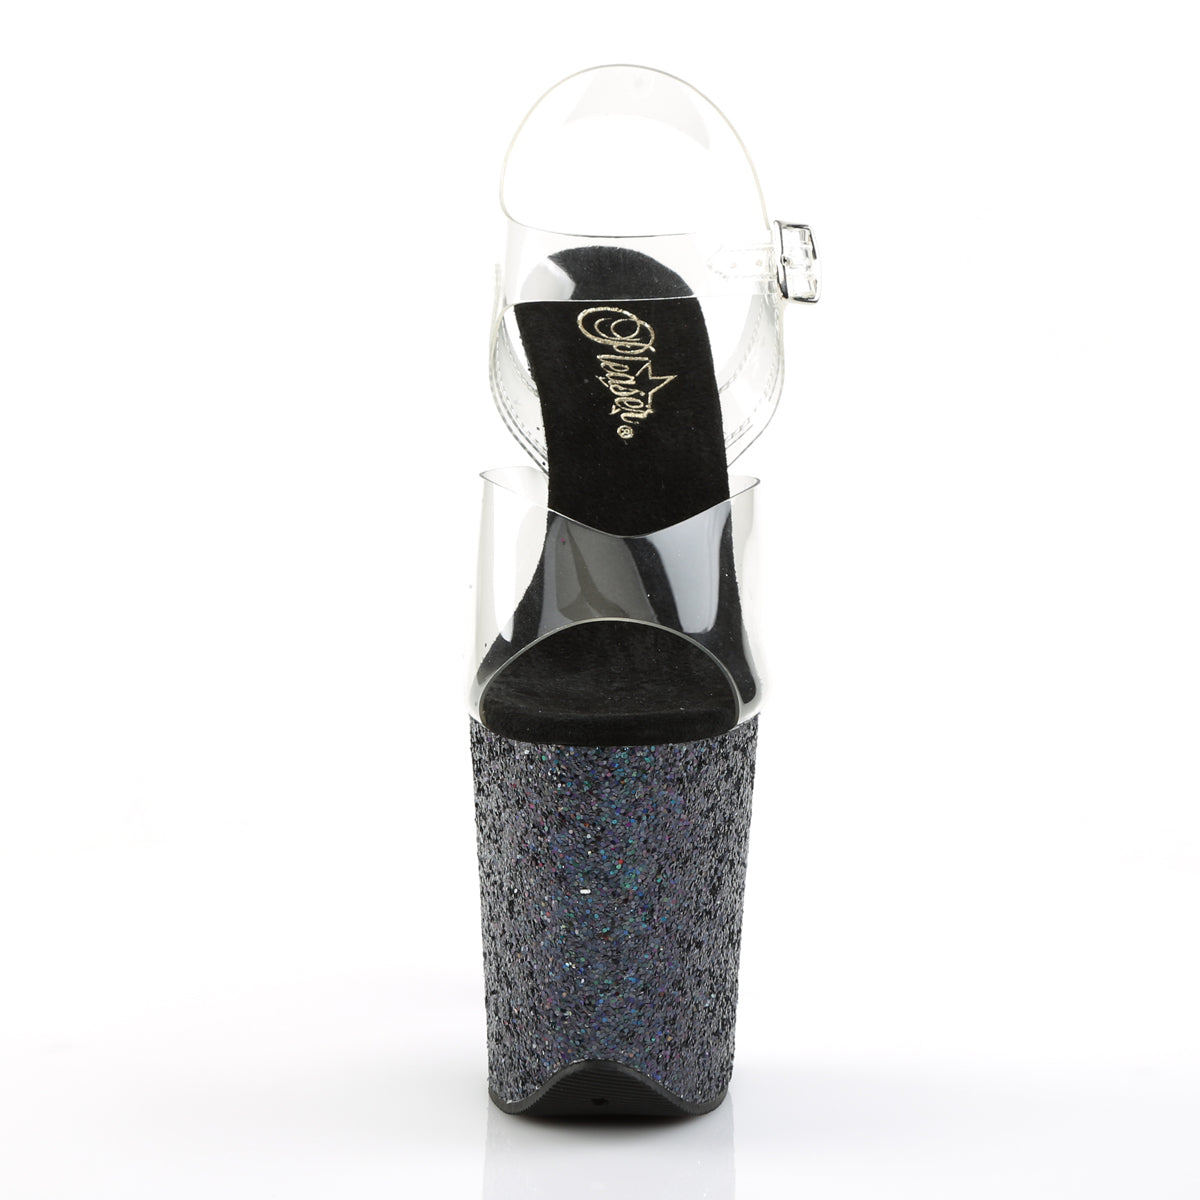 Pleaser Womens Sandals FLAMINGO-808LG Clr/Blk Multi Glitter